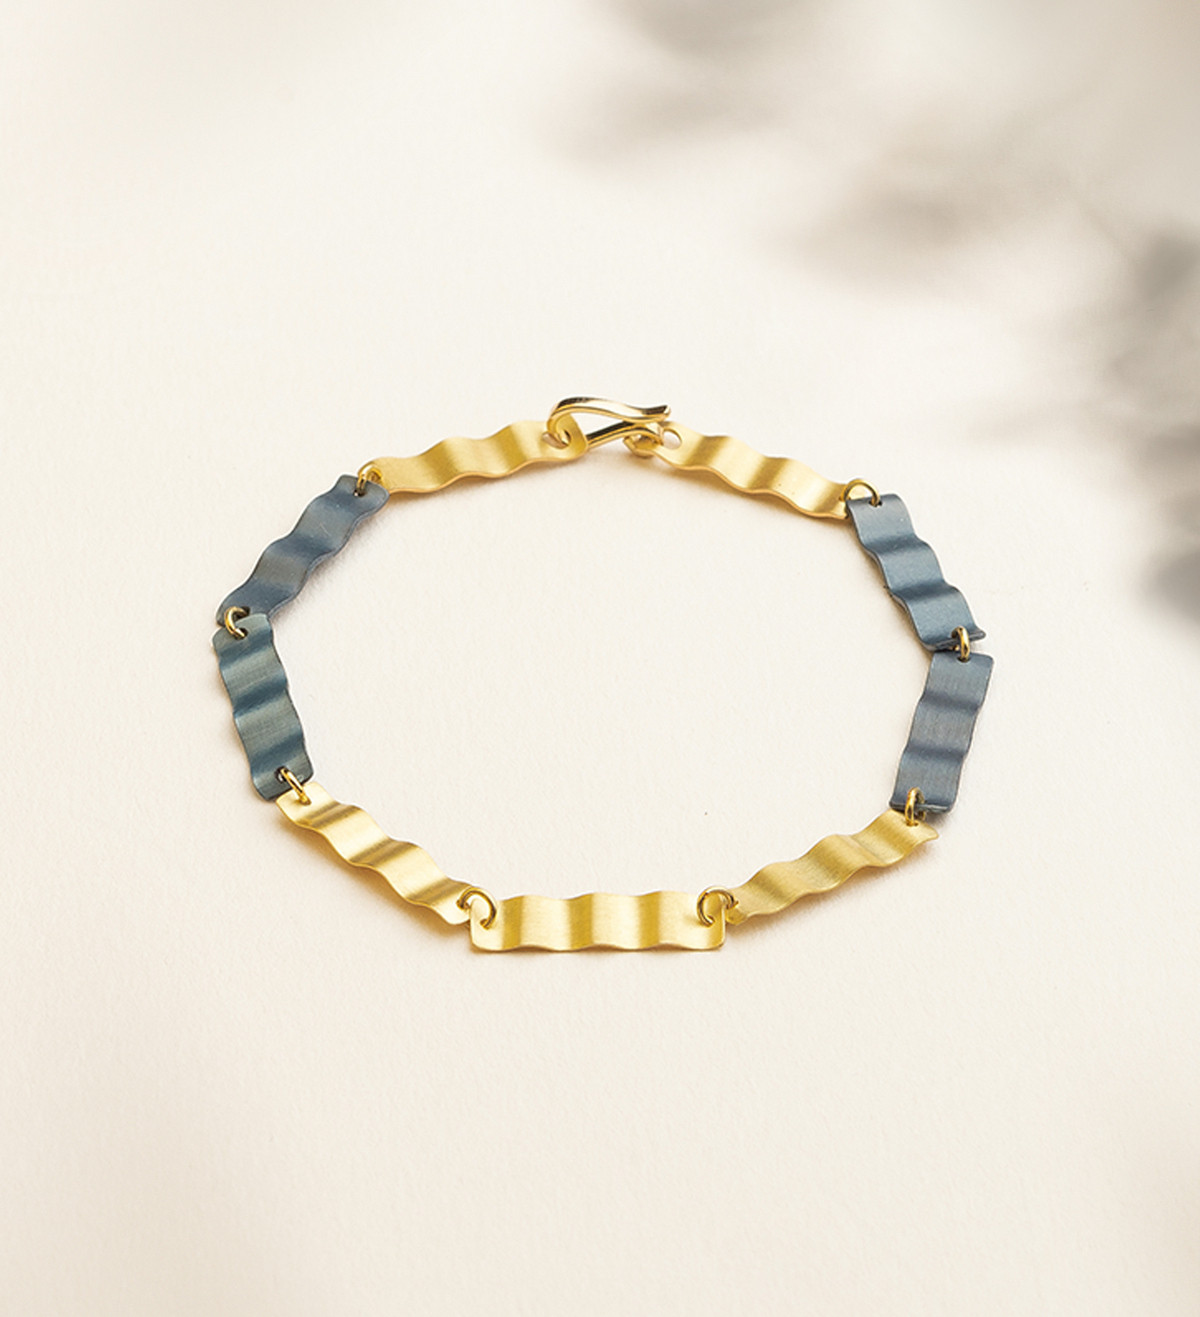 18k gold and titanium bracelet Aigua 1 band 18cm